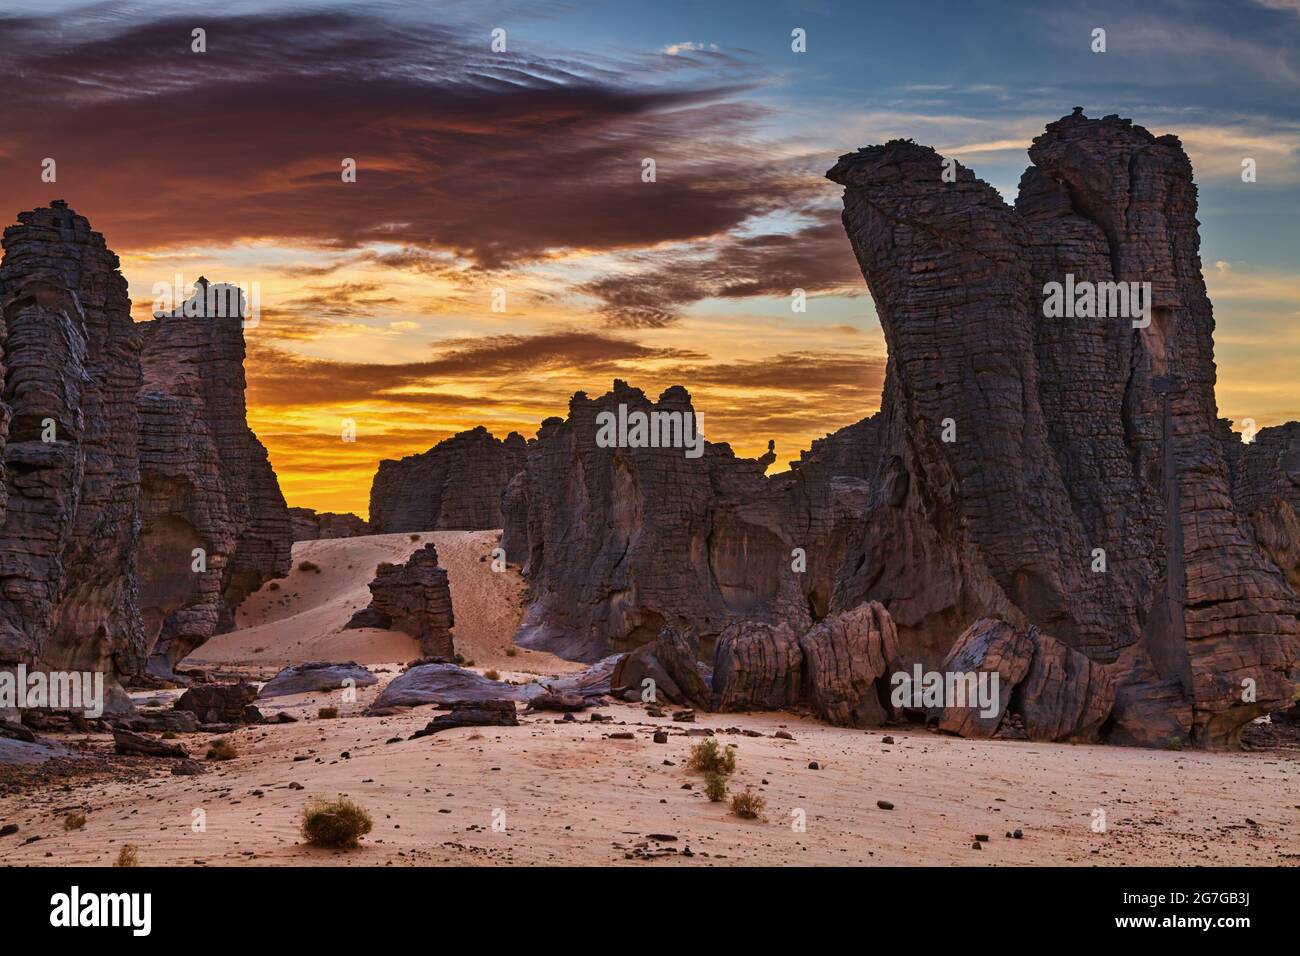 Sonnenuntergang in der Wüste Sahara, Tassili N'Ajjer, Tin Tazarift Bereich, Algerien Stockfoto